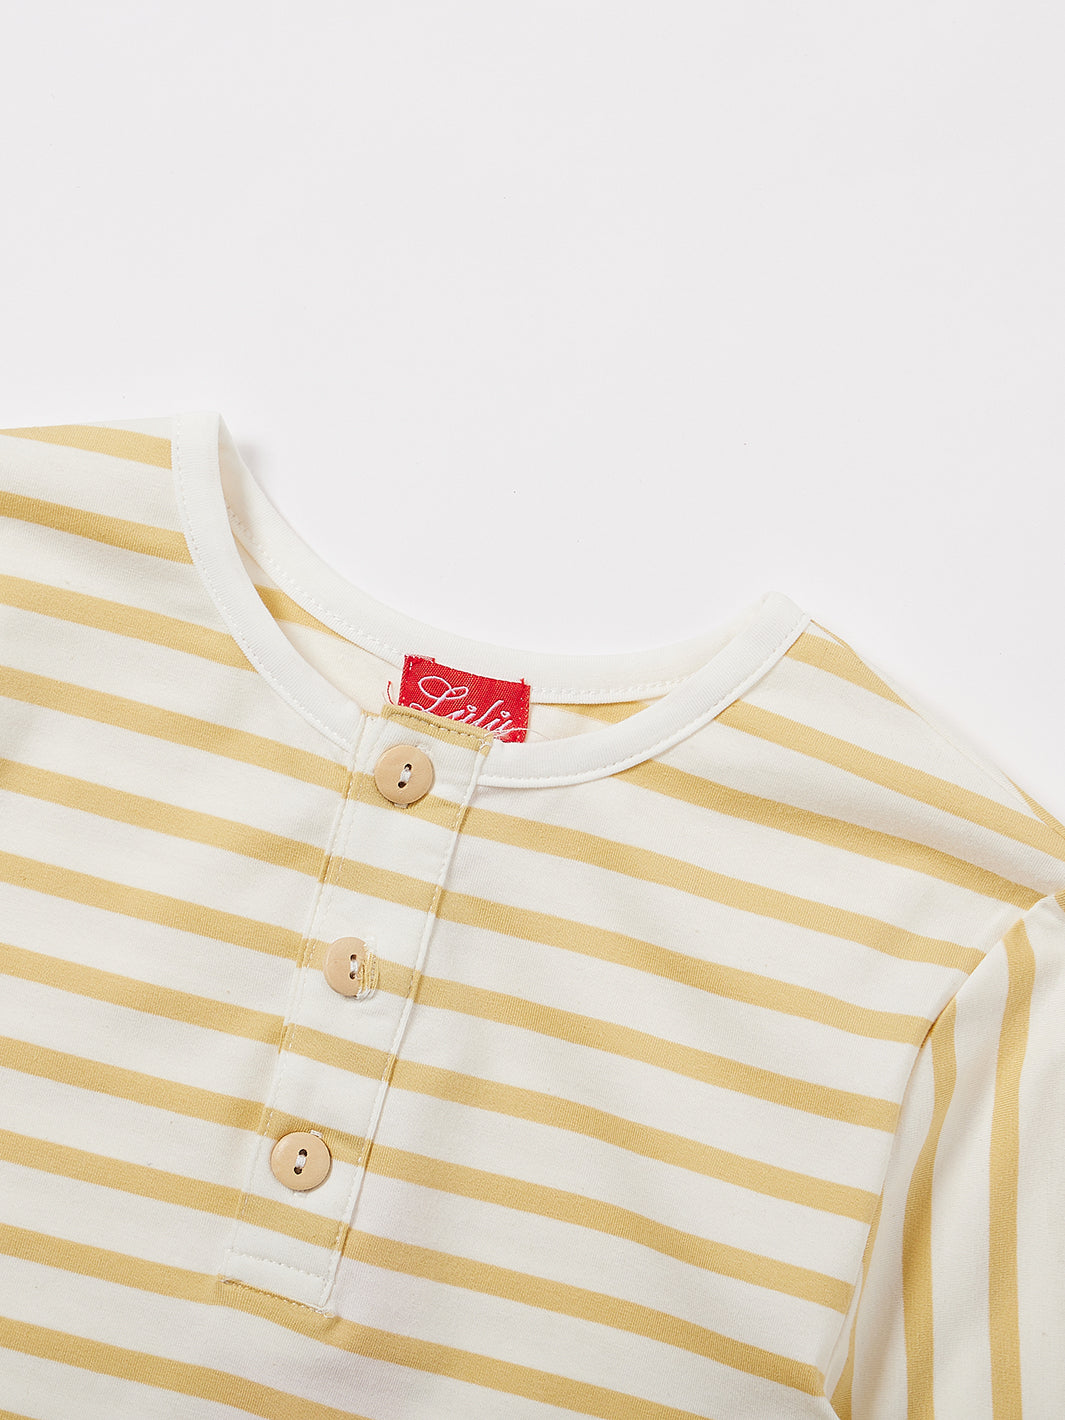 Classic Stripe Long Sleeve Top - Yellow